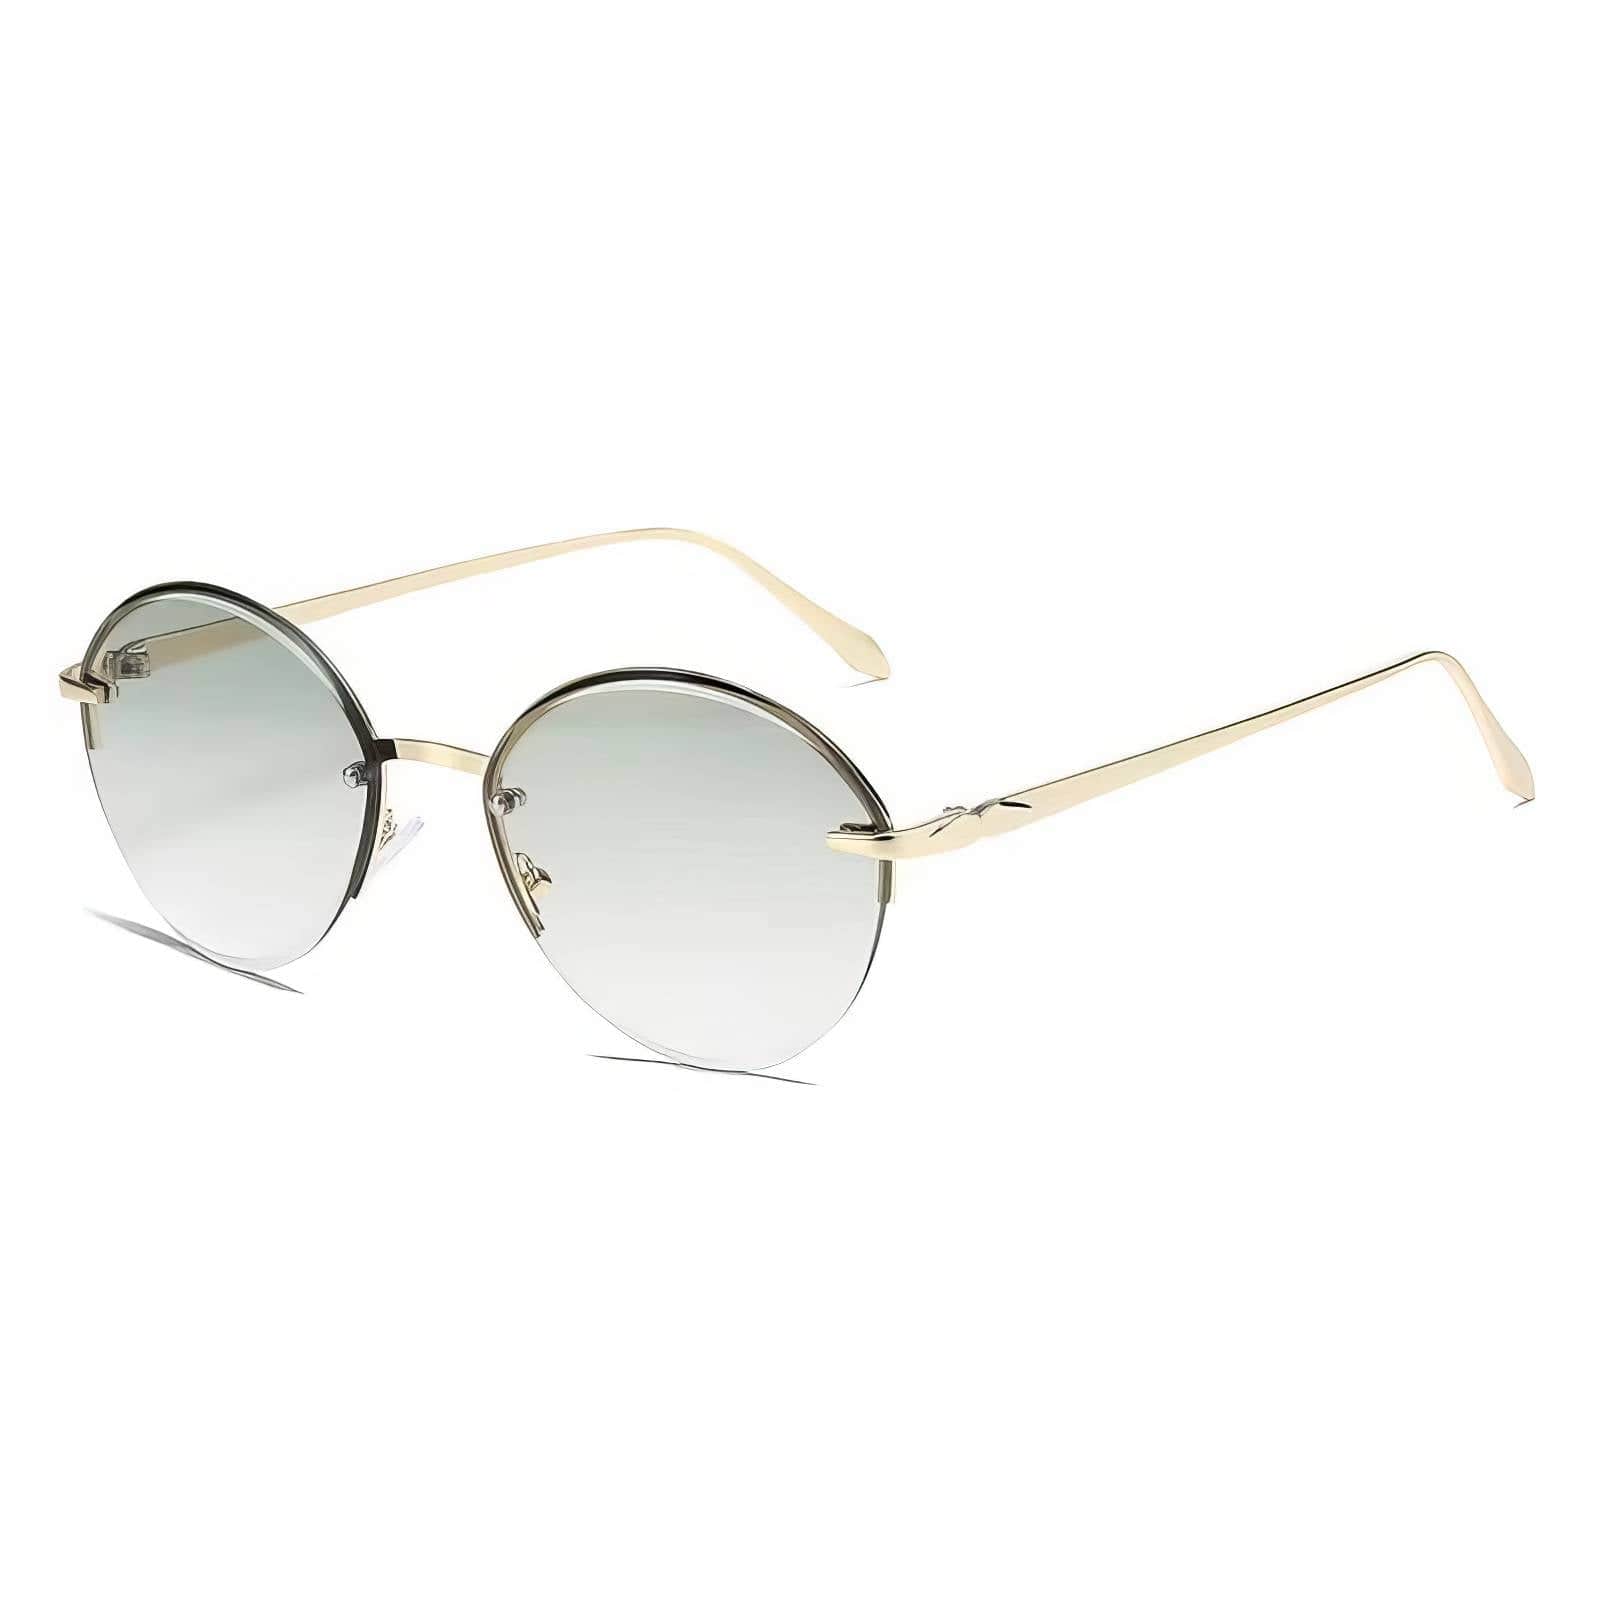 Half Metal Frame Oval Sunglasses Blue / Resin